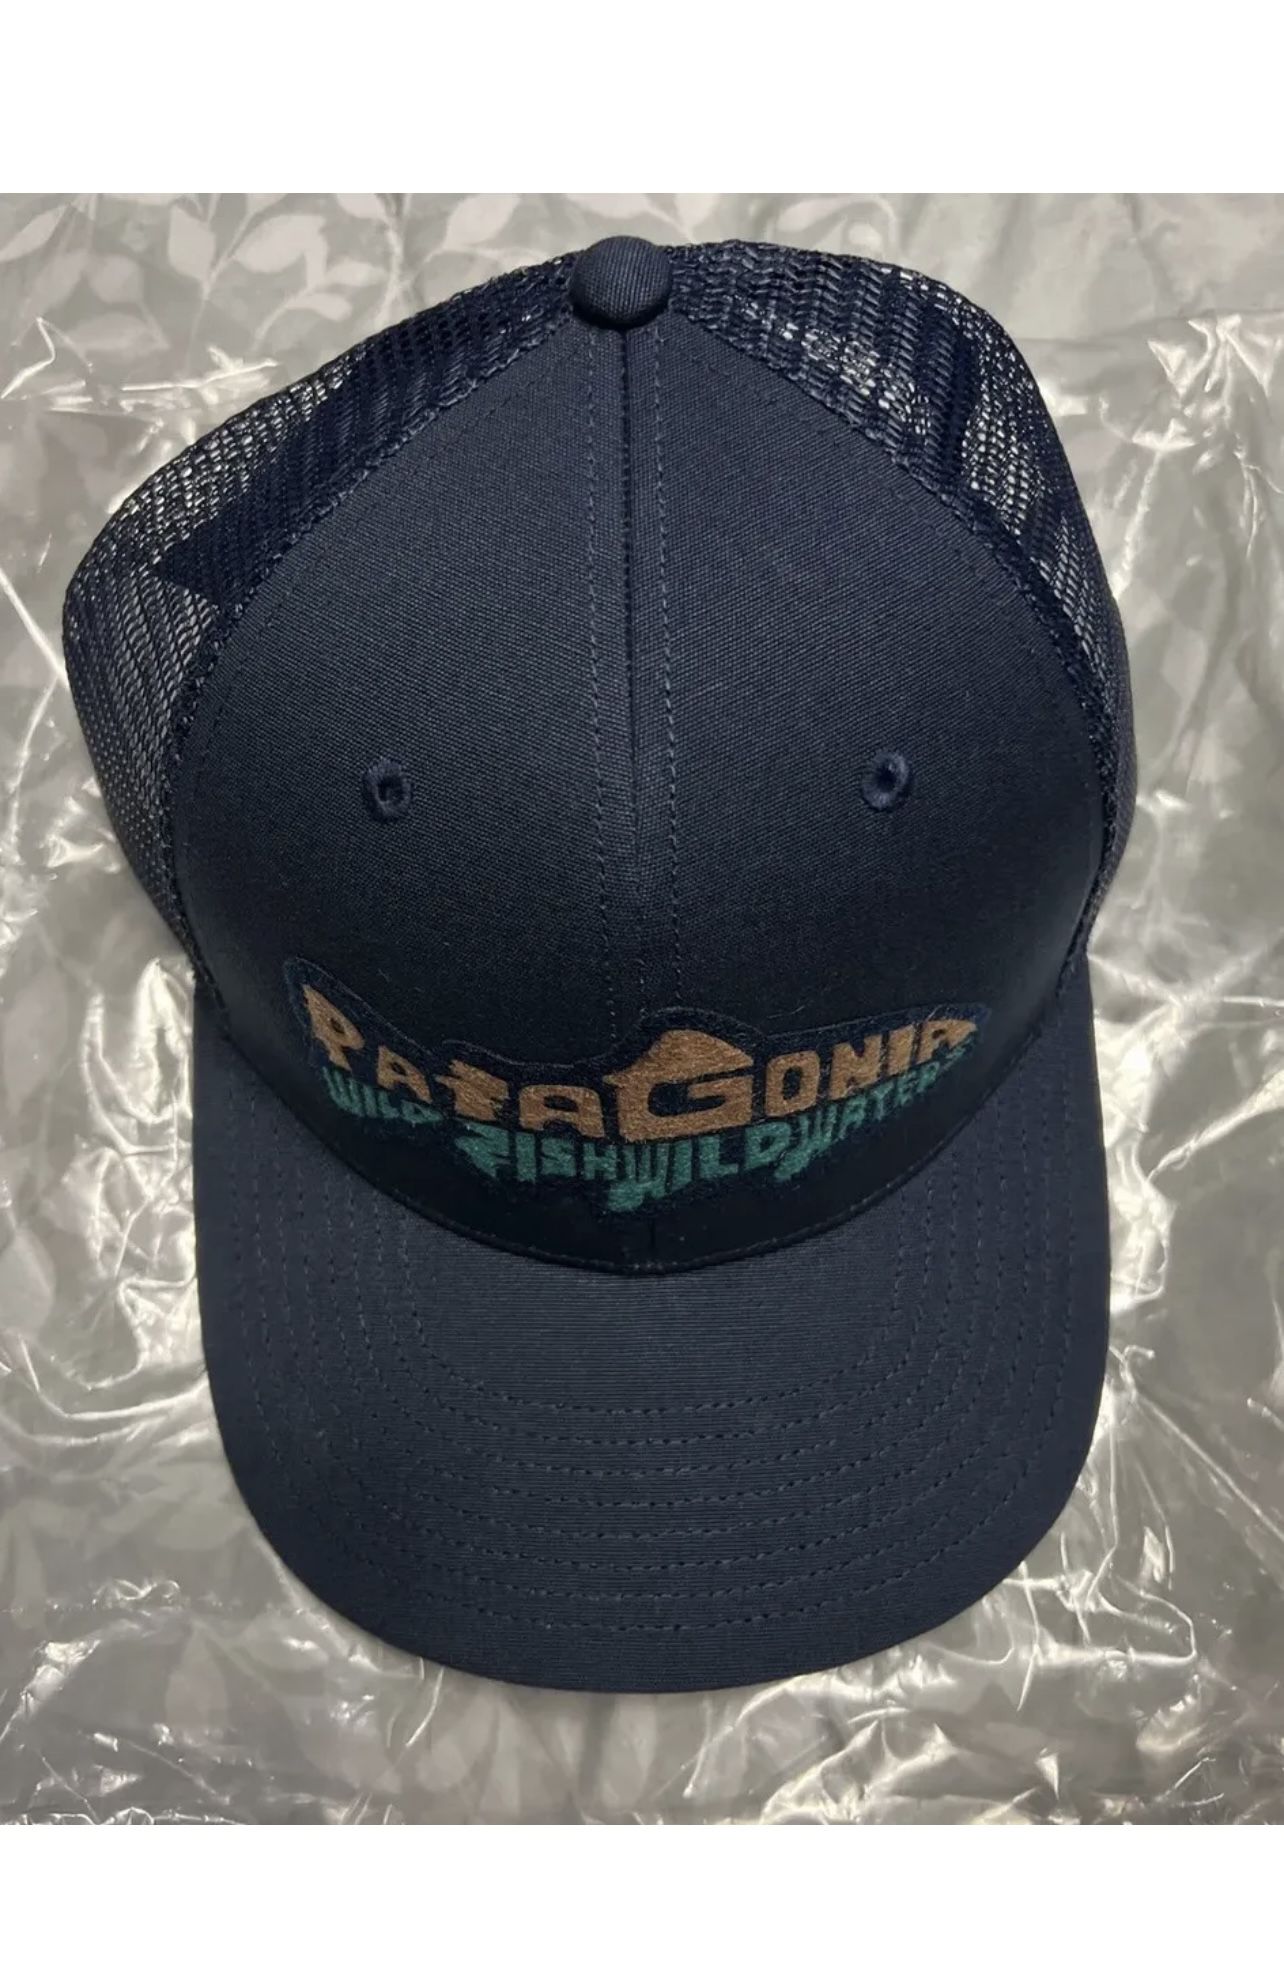 New Patagonia Wild Waters Trucker Hat Fly Fishing NetPlus Mesh Hat Cap Snapback